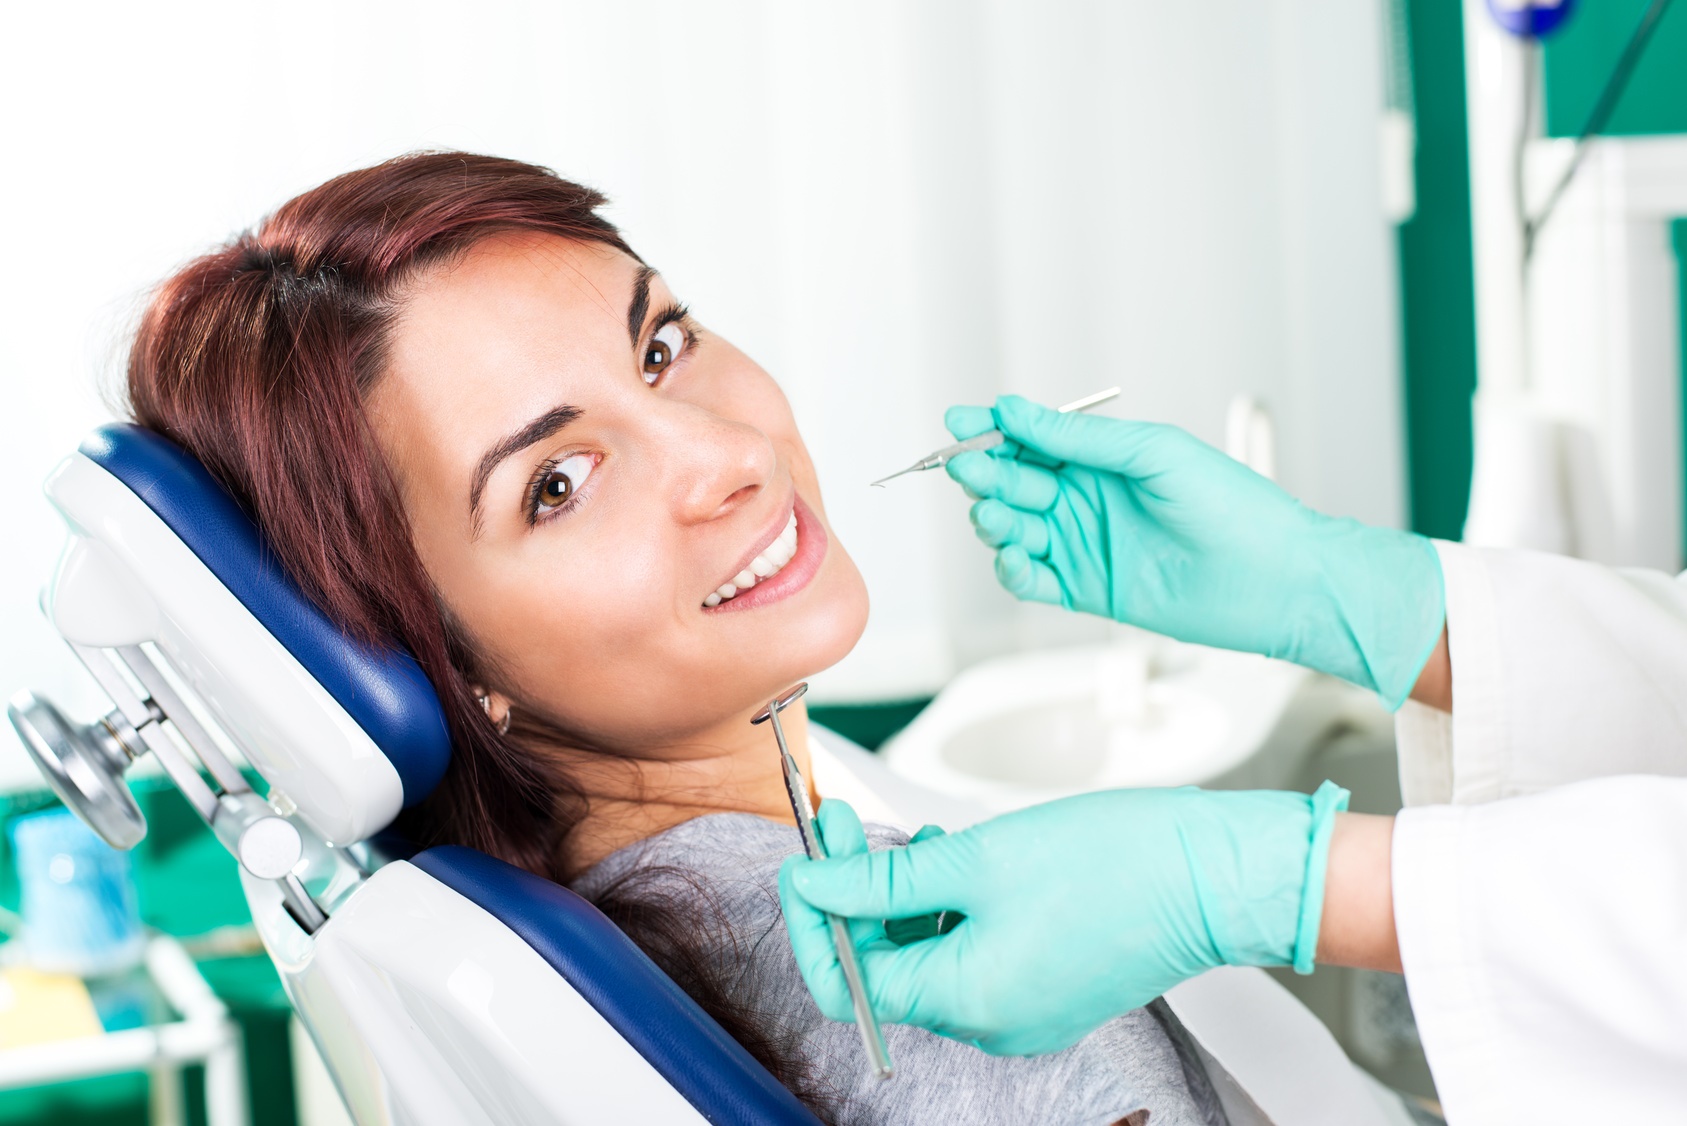 Smiling woman at dentist